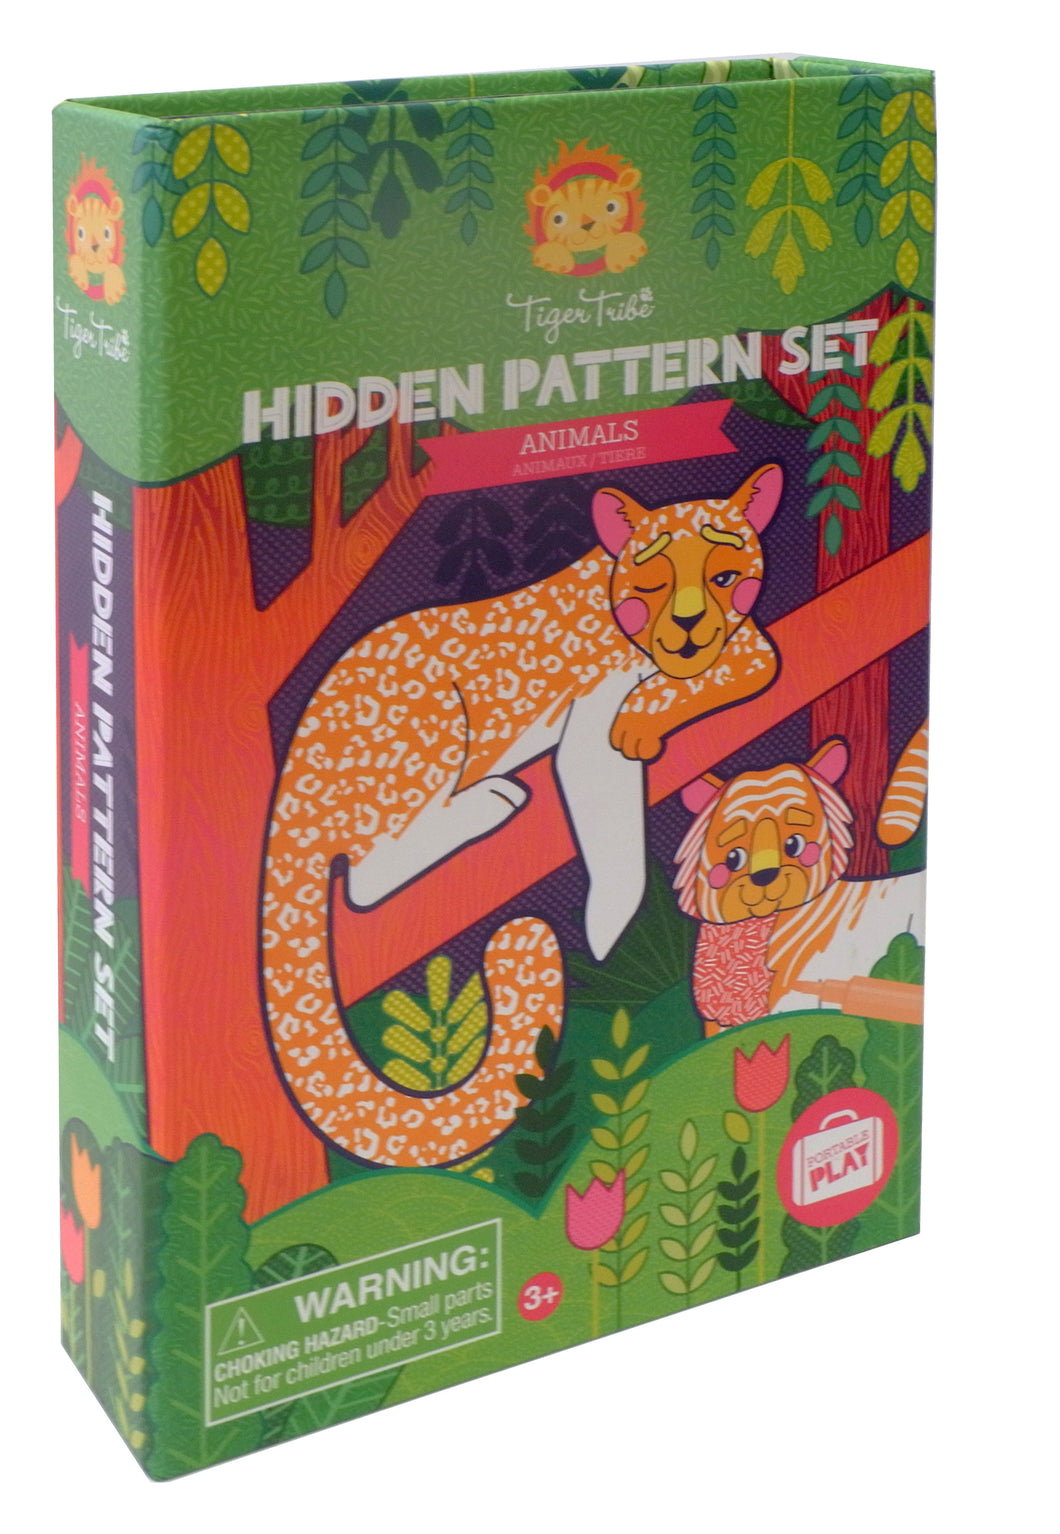 Tiger Tribe Hidden Pattern Set Animals (kleurset)